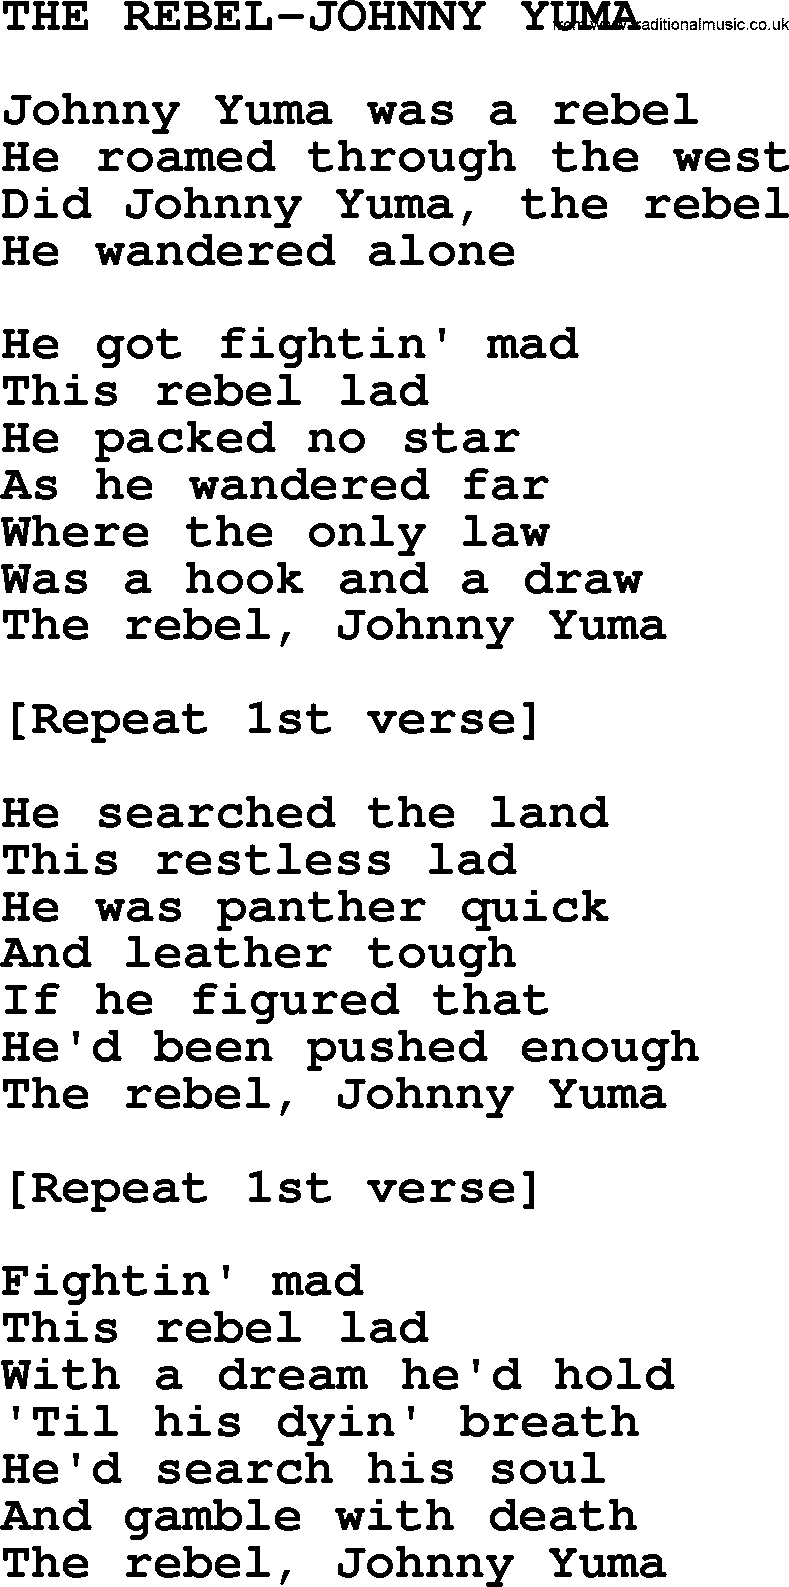 Johnny Cash song The Rebel-johnny Yuma.txt lyrics